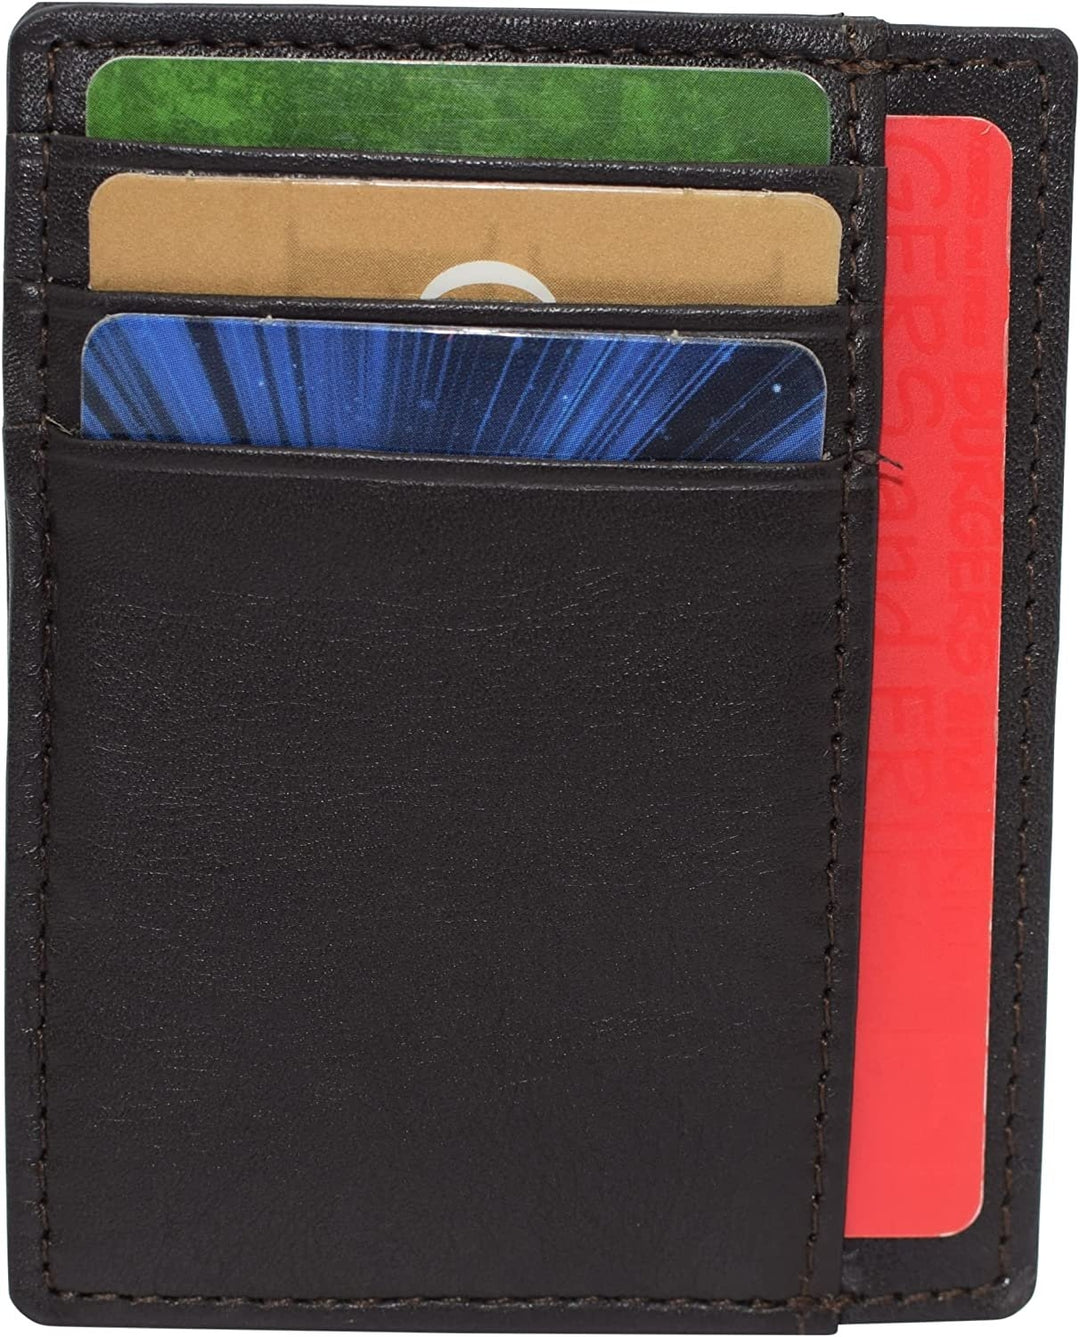 Swiss Marshall RFID Blocking Front Pocket Leather Slim Credit Card Case Holder Wallet Image 4